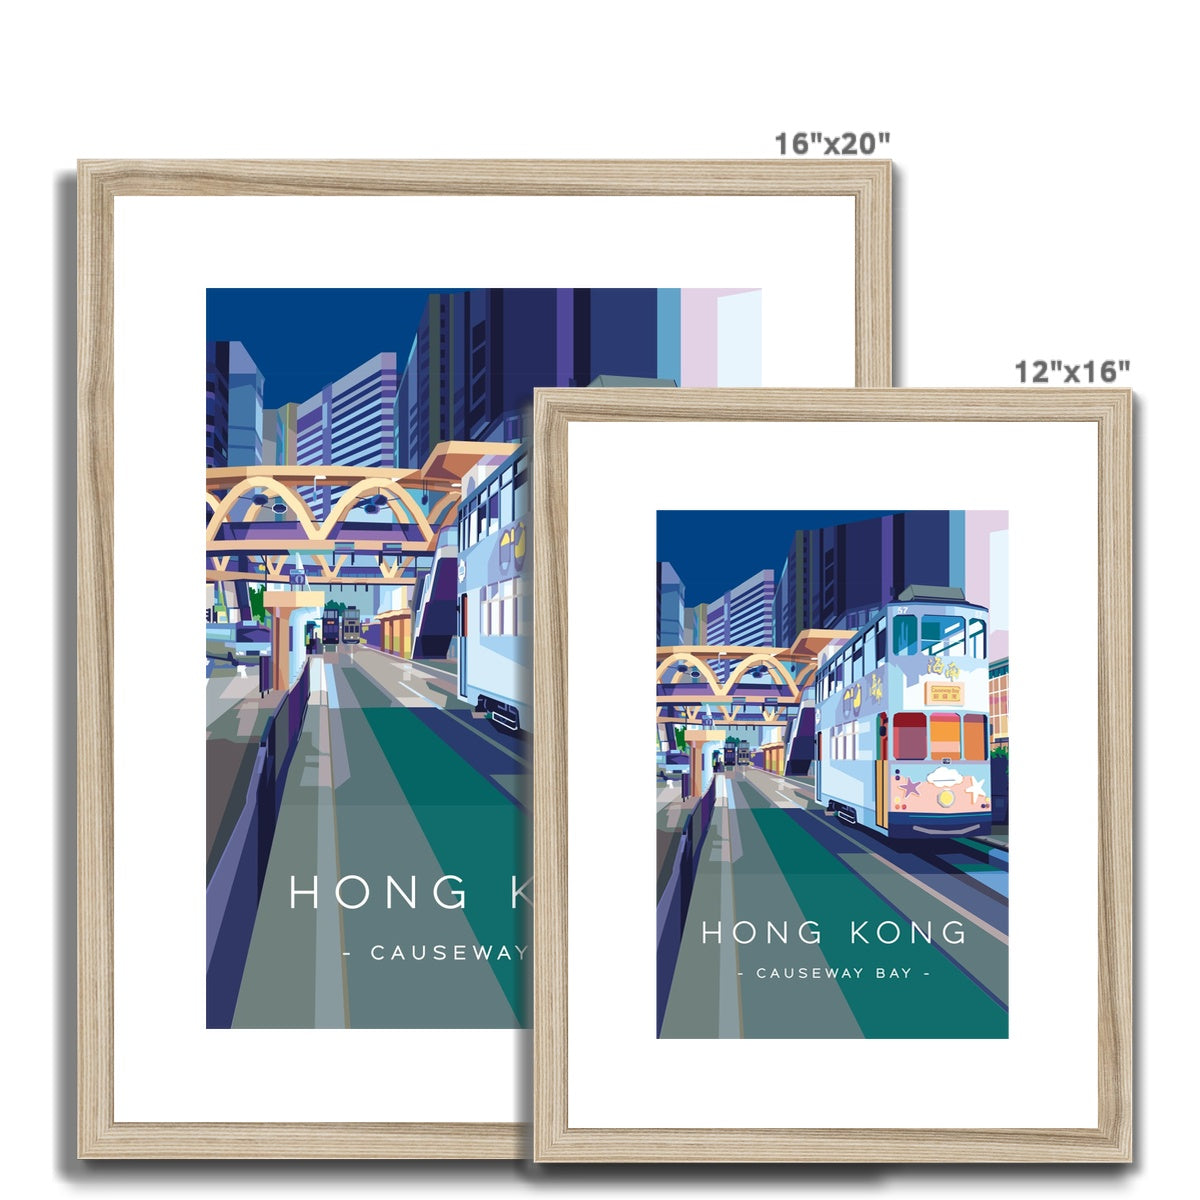 Hong Kong Travel - Causeway Bay  Framed & Mounted Print